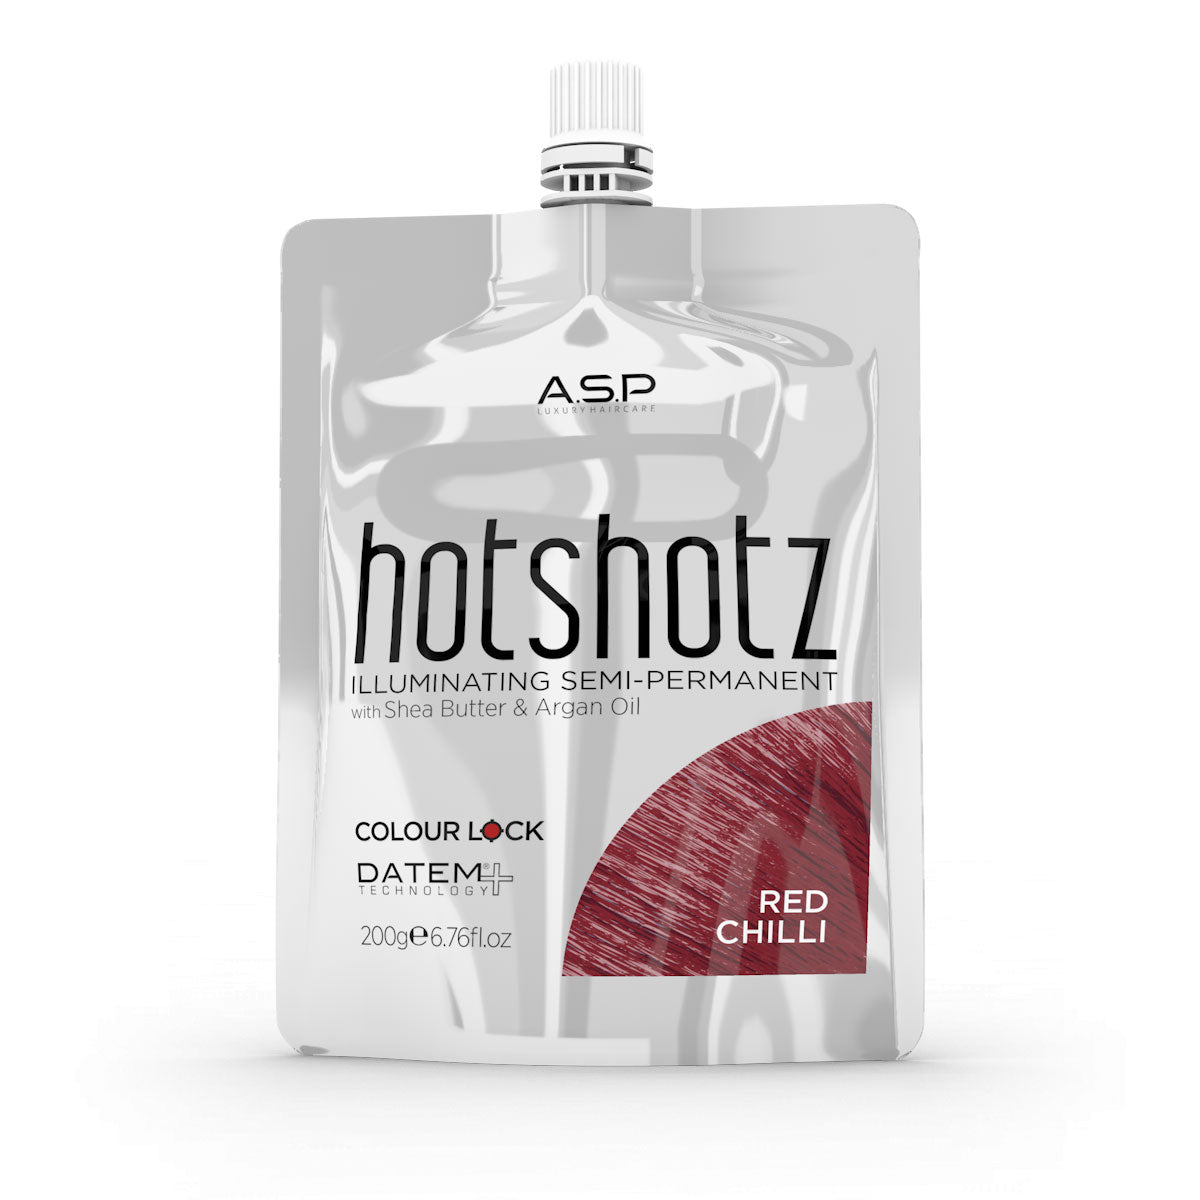 Affinage Hotshotz Semi Permanent Hair Dye - 200ml - Red Chilli